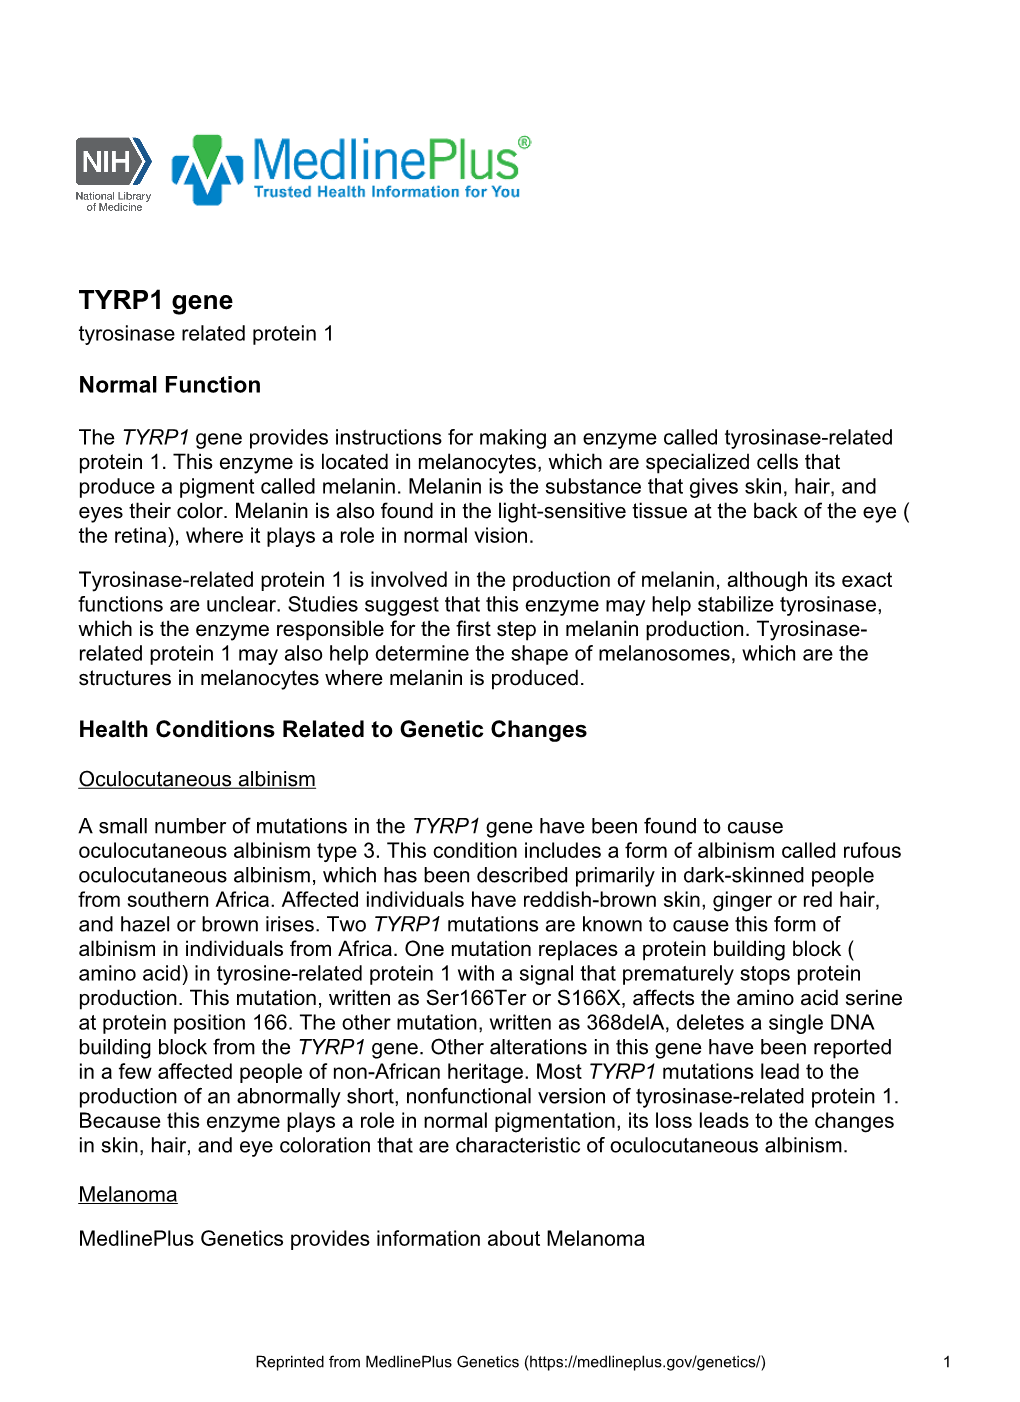 TYRP1 Gene Tyrosinase Related Protein 1